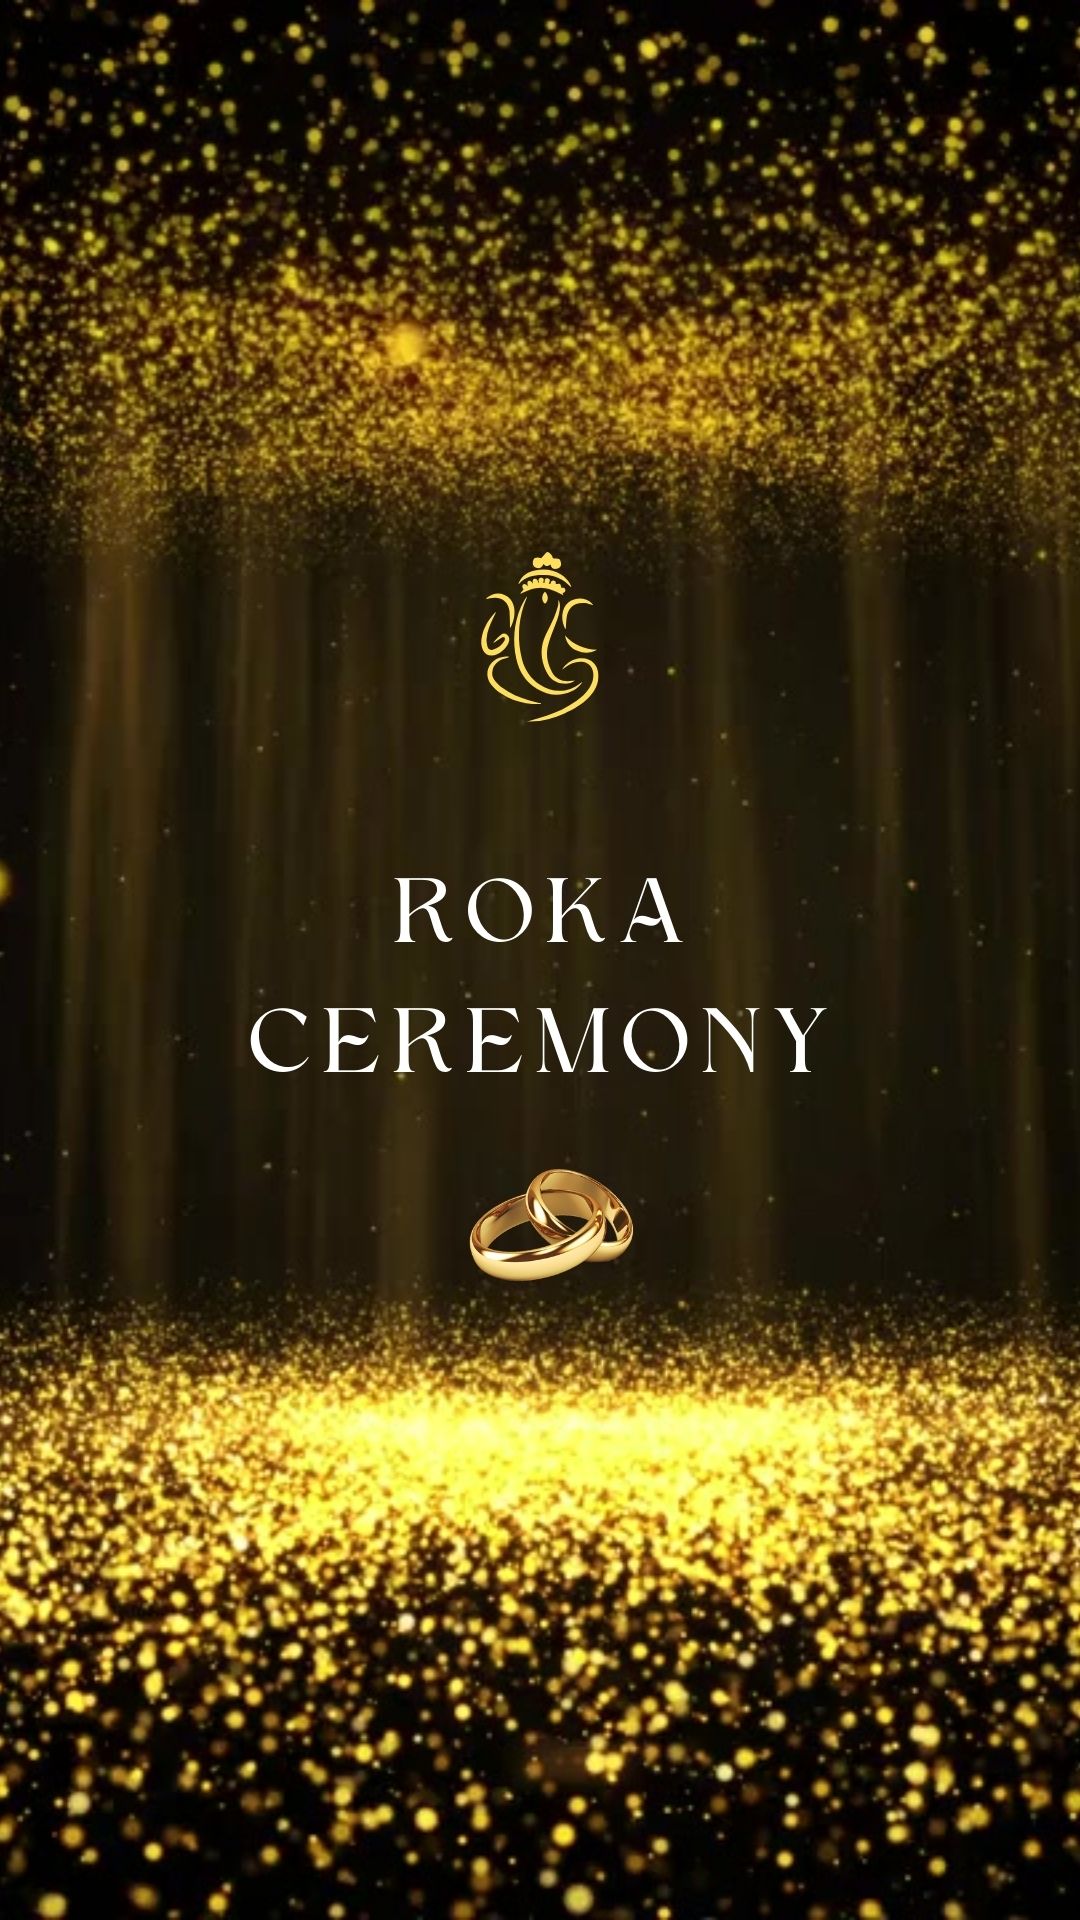 Golden Roka ceremony video invitation